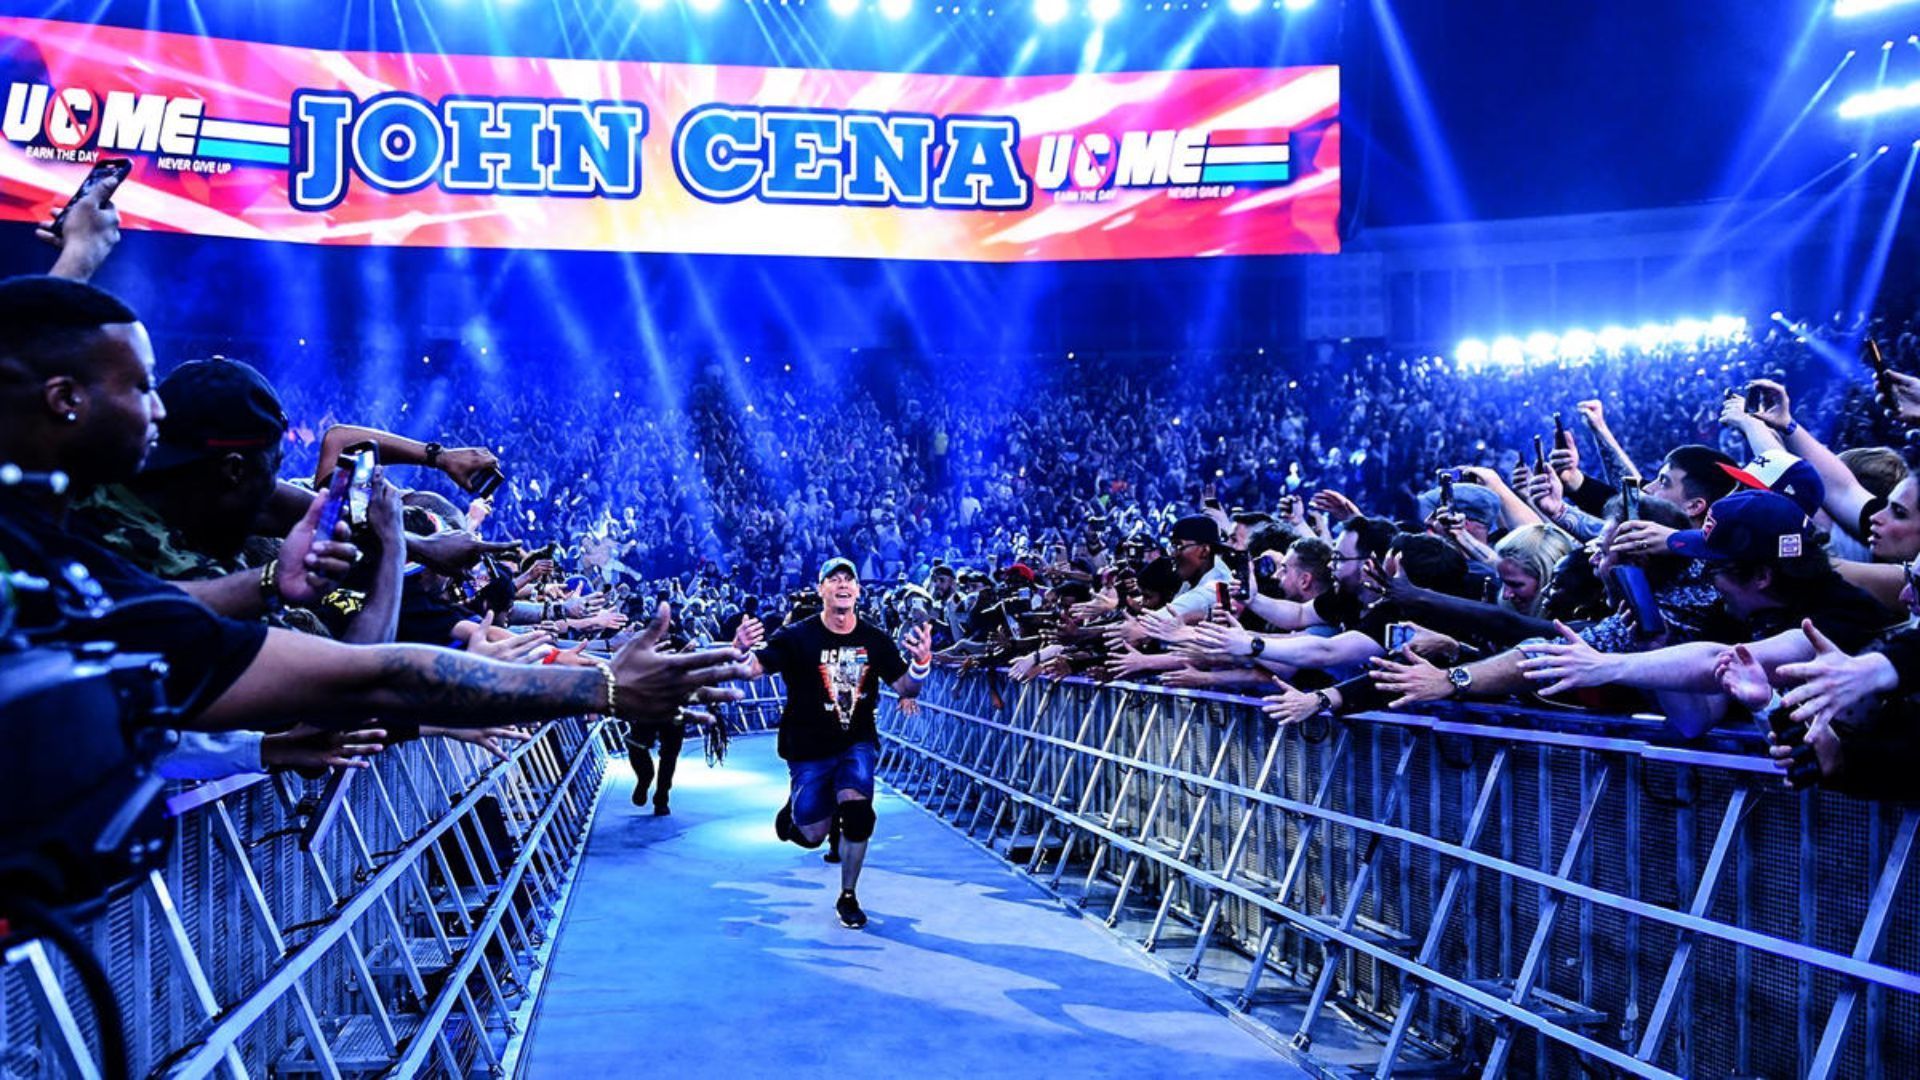 John Cena during his entrance. Image Credits: wwe.com 